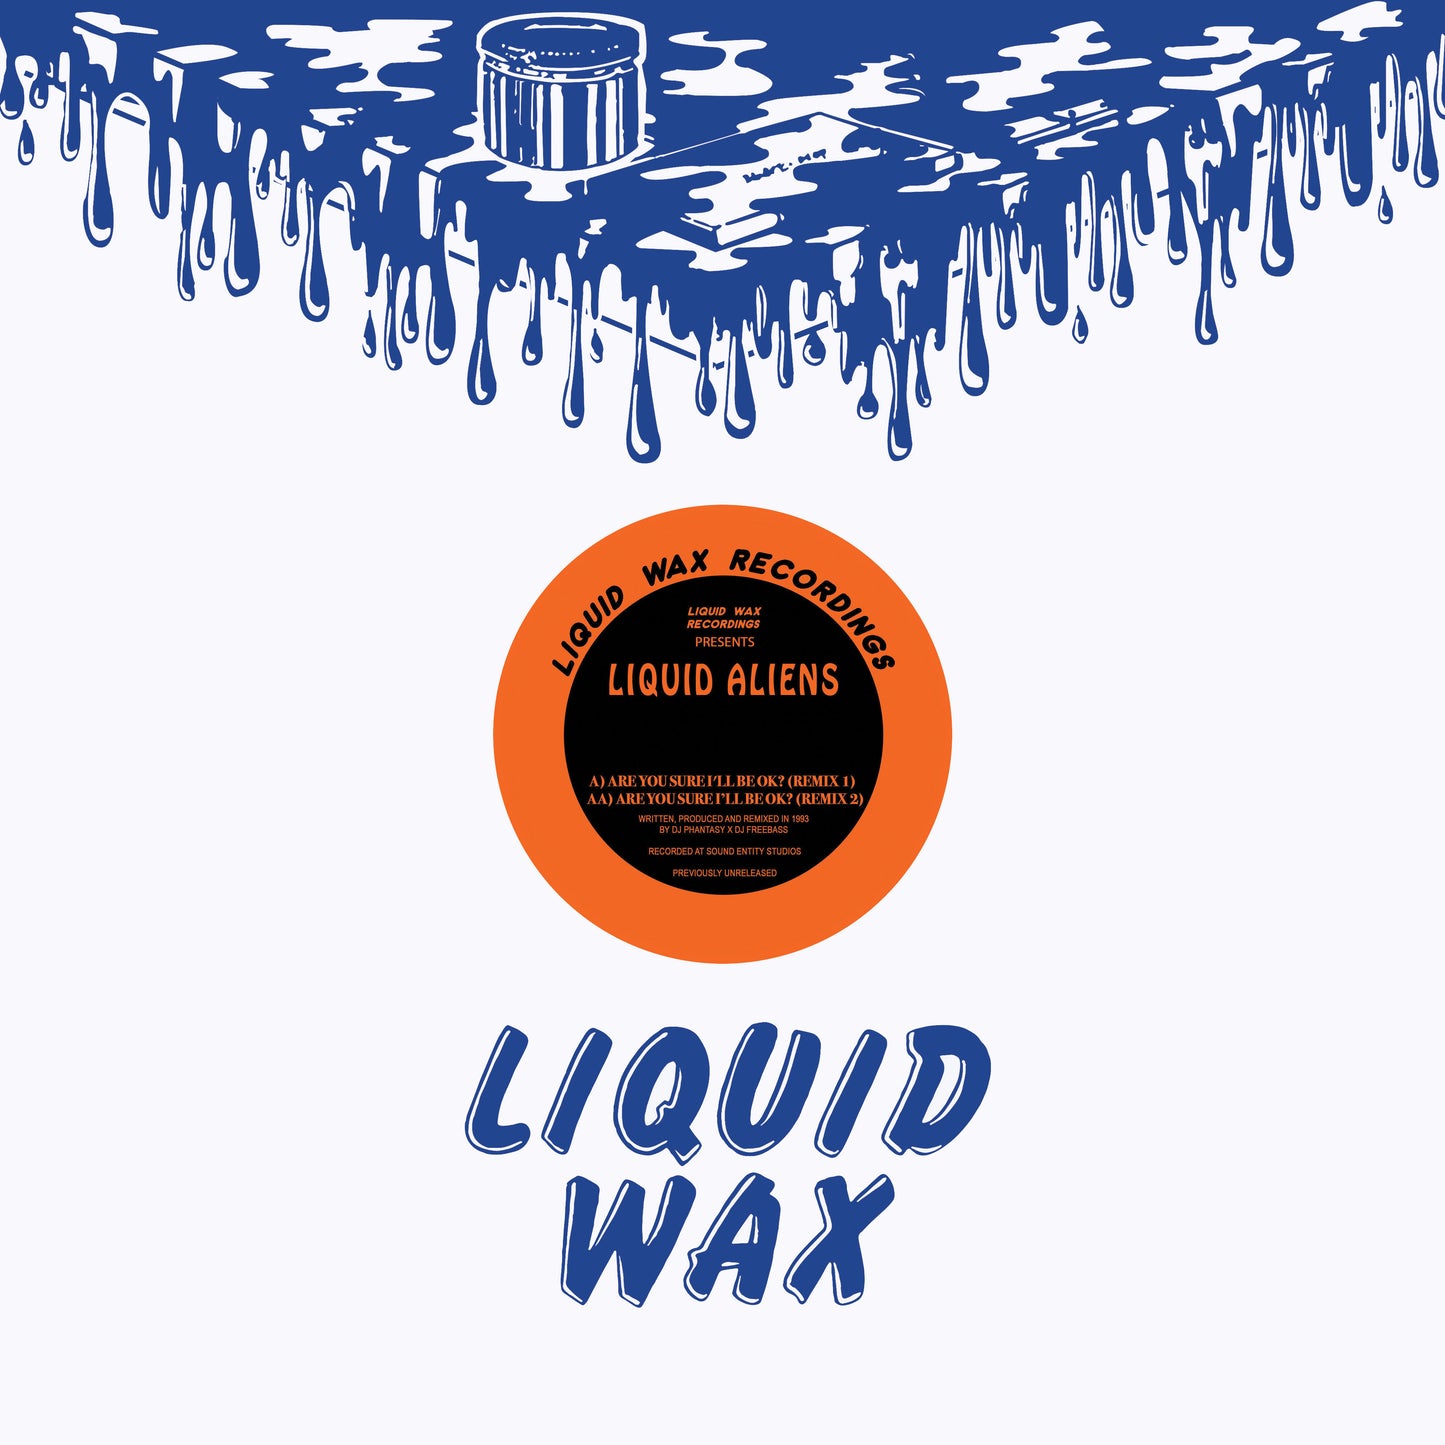 Liquid Aliens - Are You Sure You'll Be Okay? (Remixes) (12" Coloured Vinyl) - Pre Order